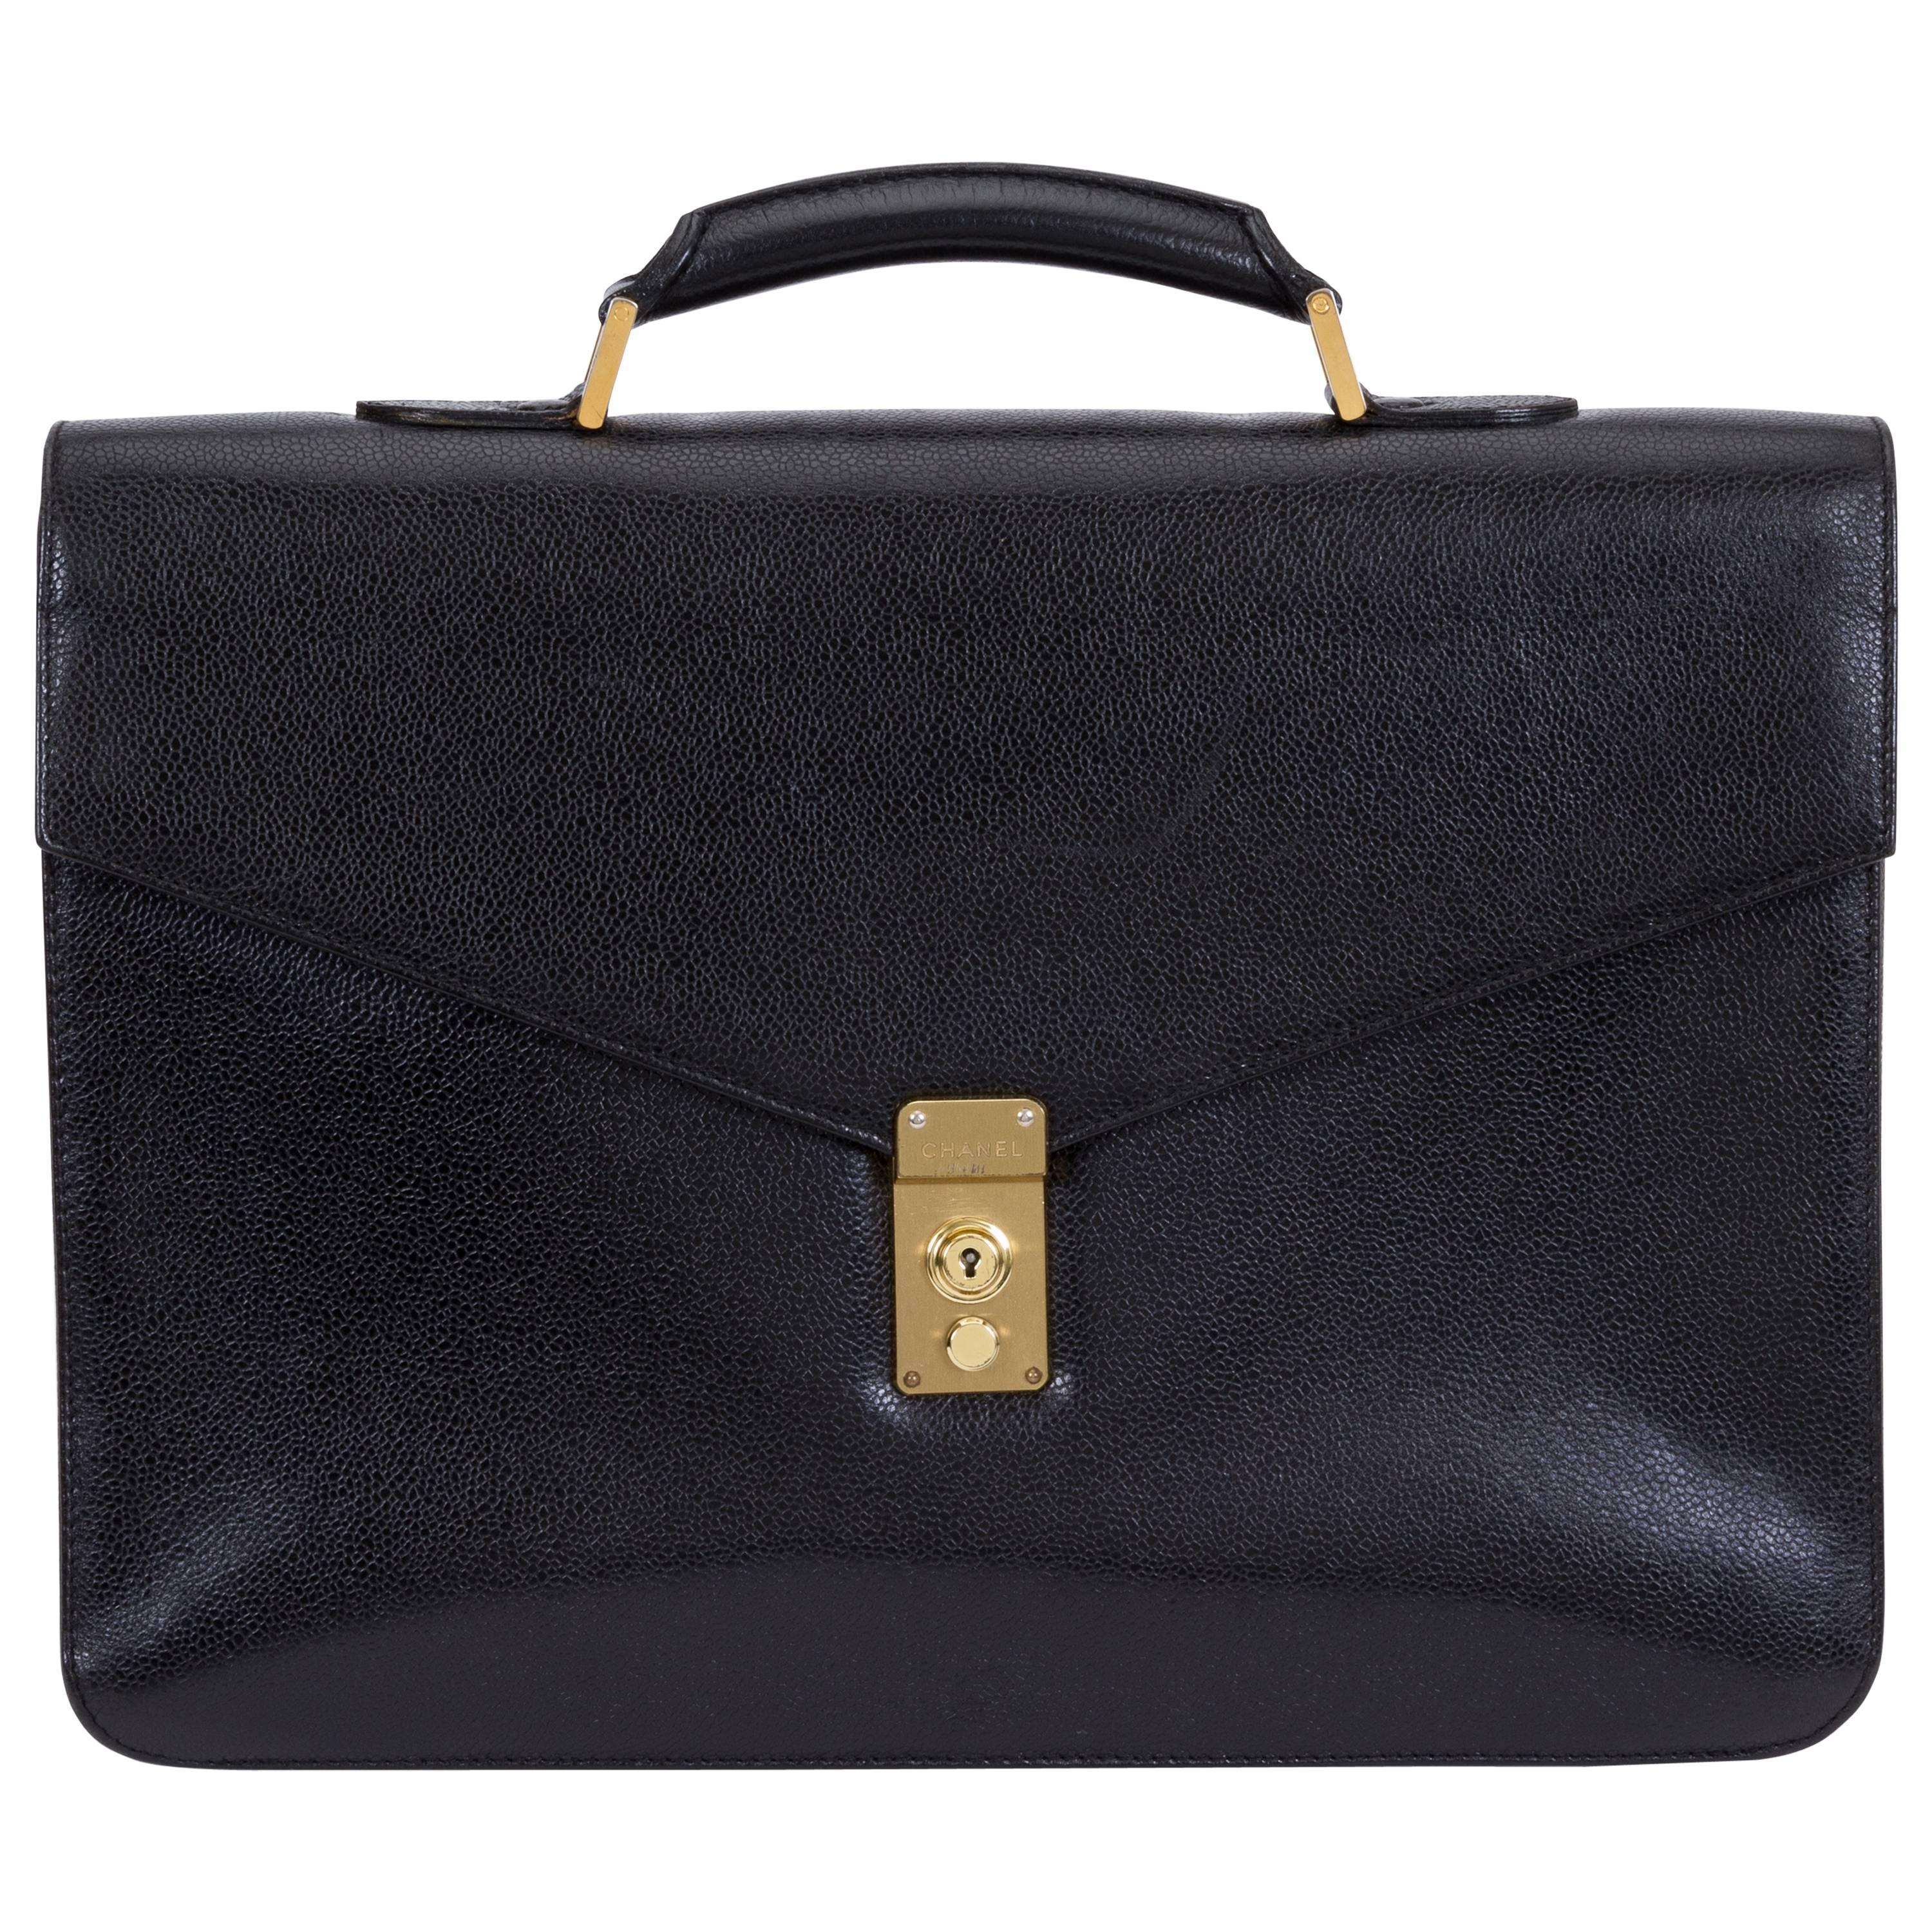 Chanel Black Caviar Unisex Briefcase Bag